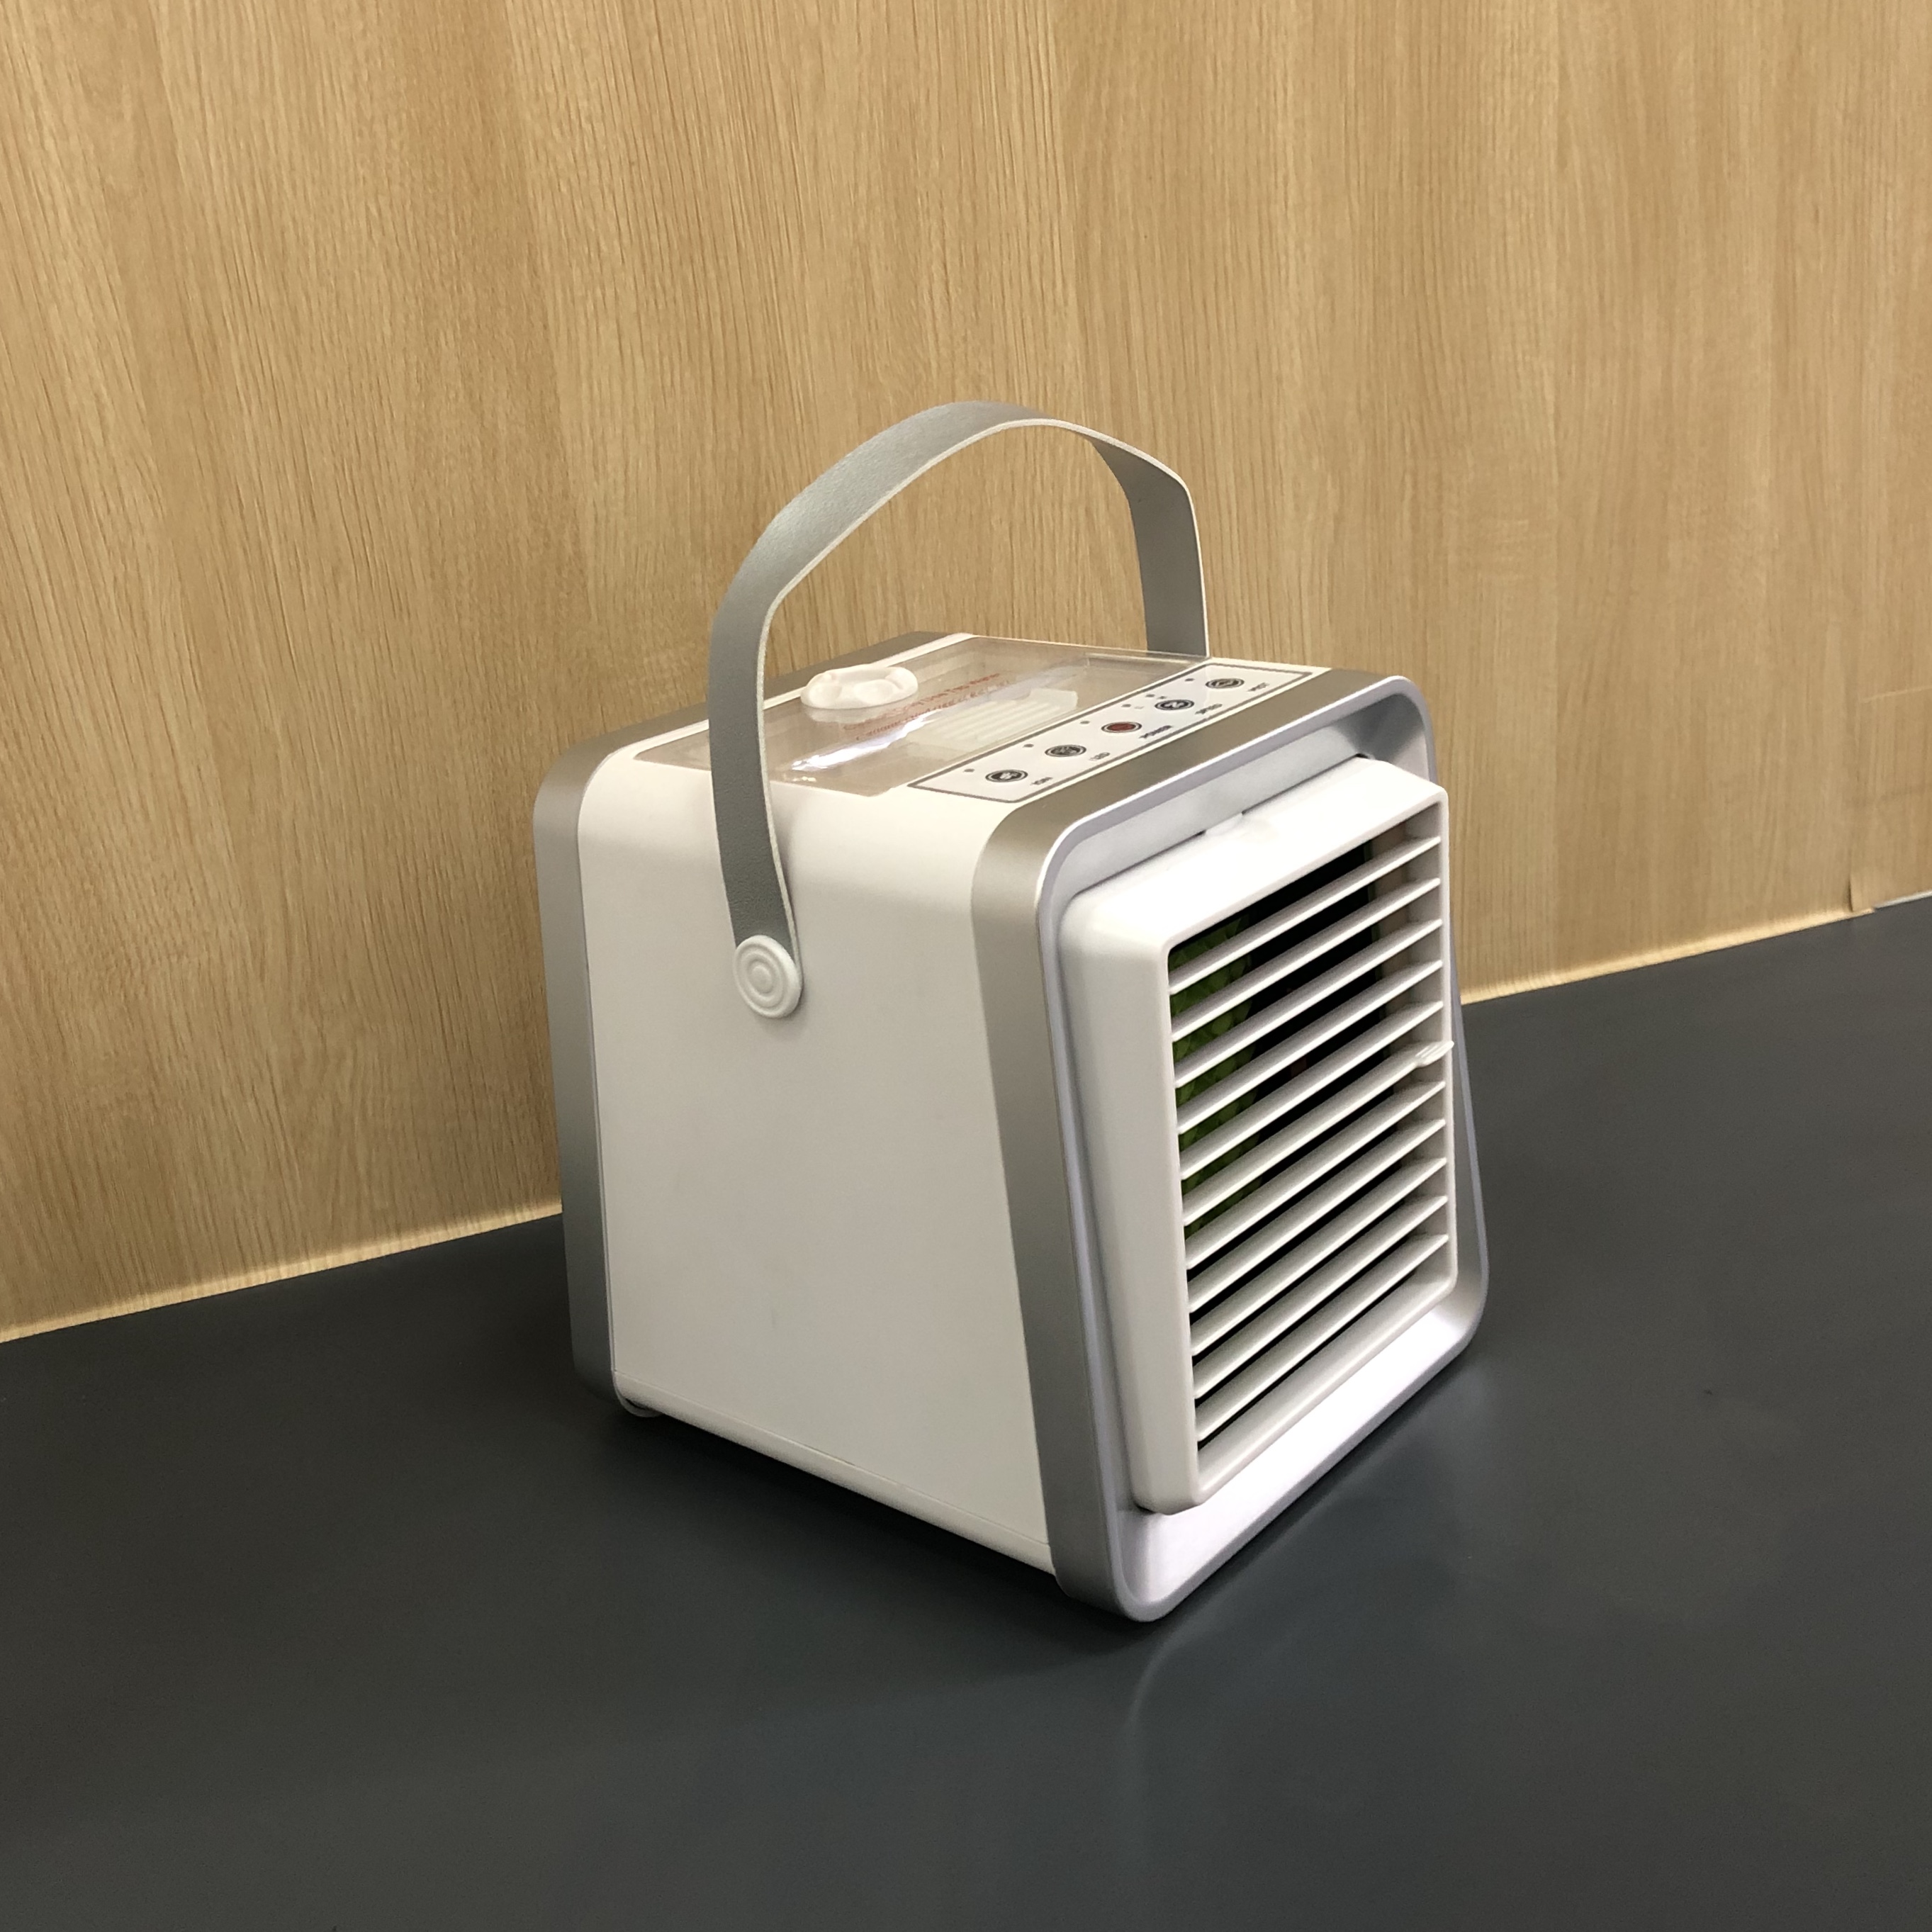 Portable table evaporative air cooler